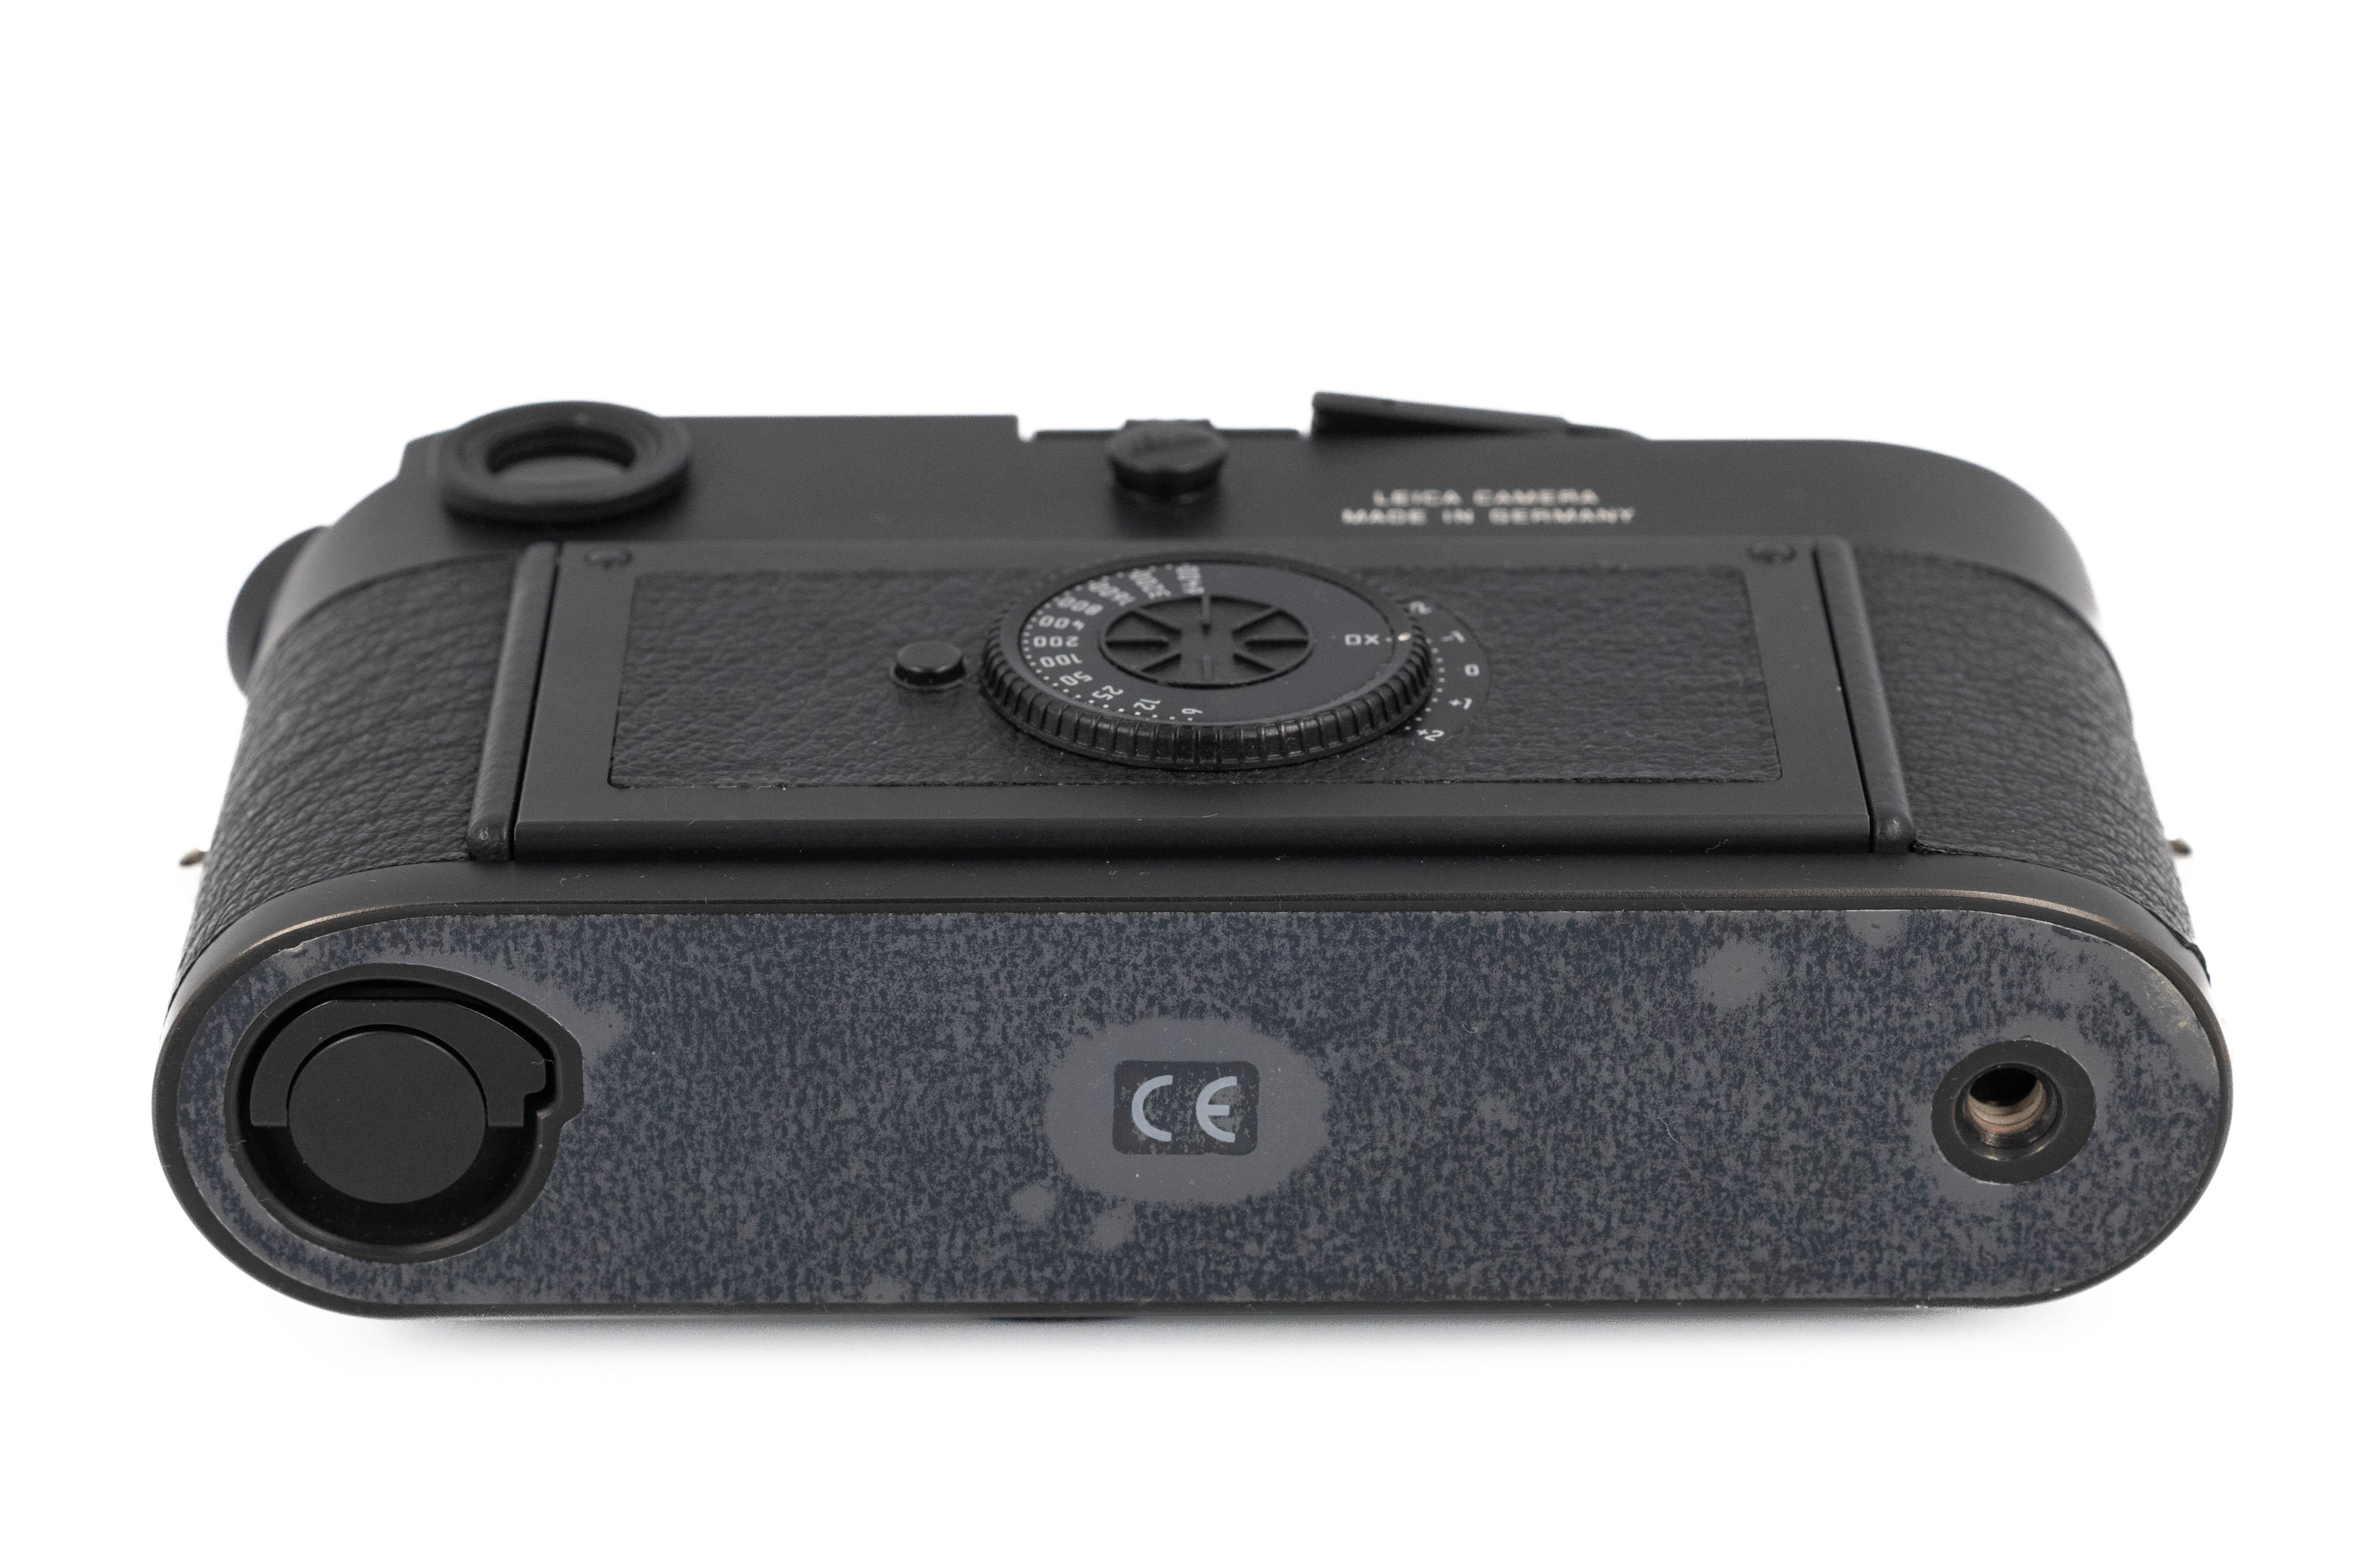 Leica M7 Black Chrome Betriebskamera 10513